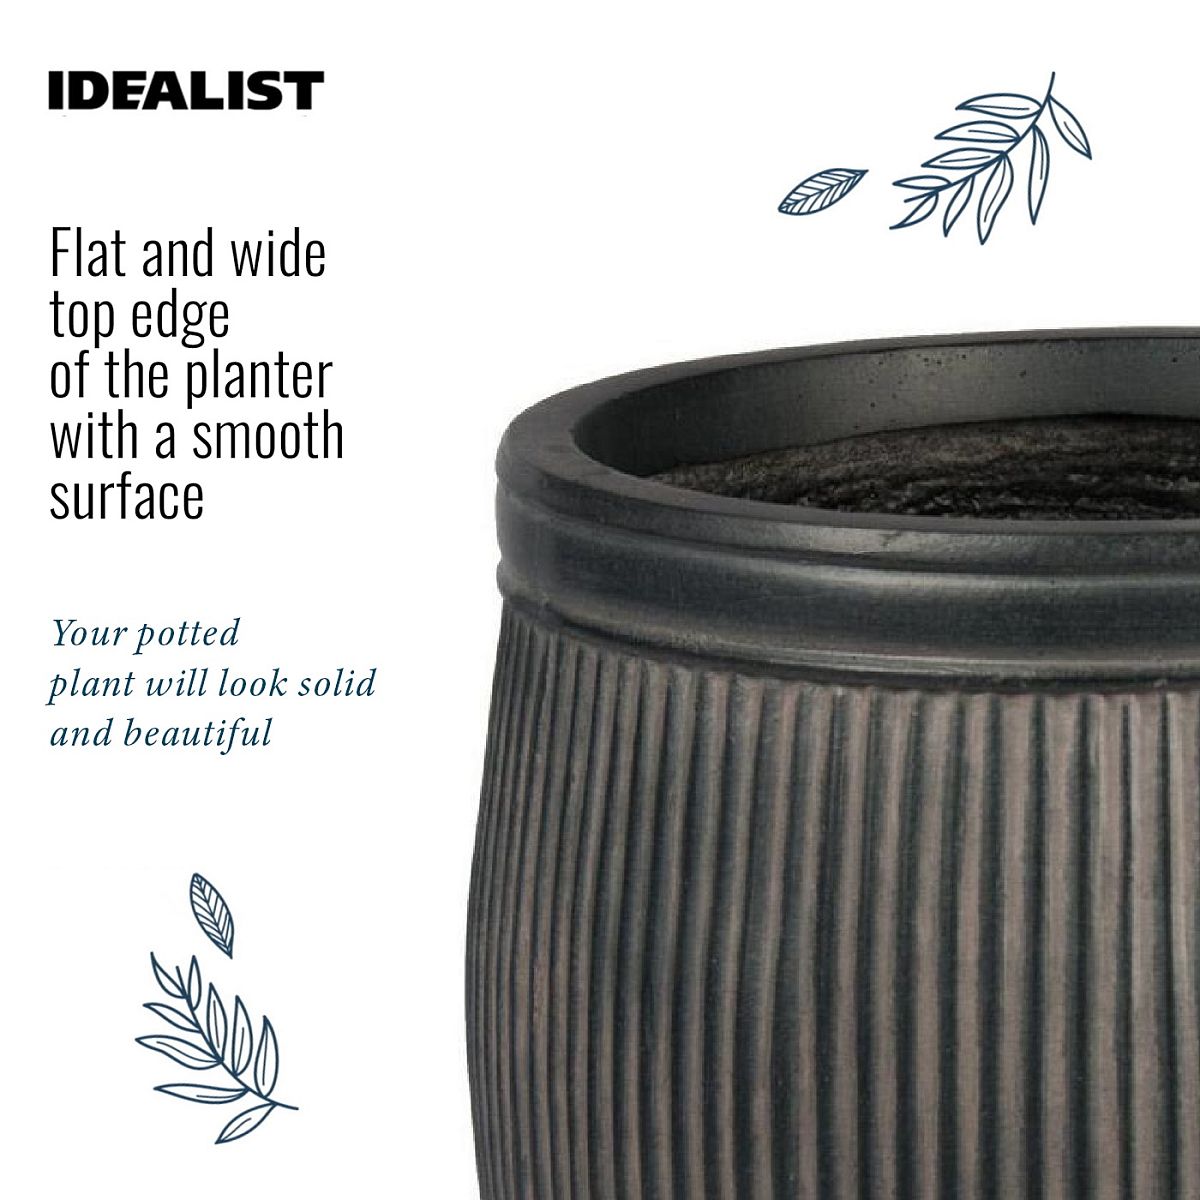 IDEALIST Lite Vertical Ribbed Vintage Style Barrel Round Planter